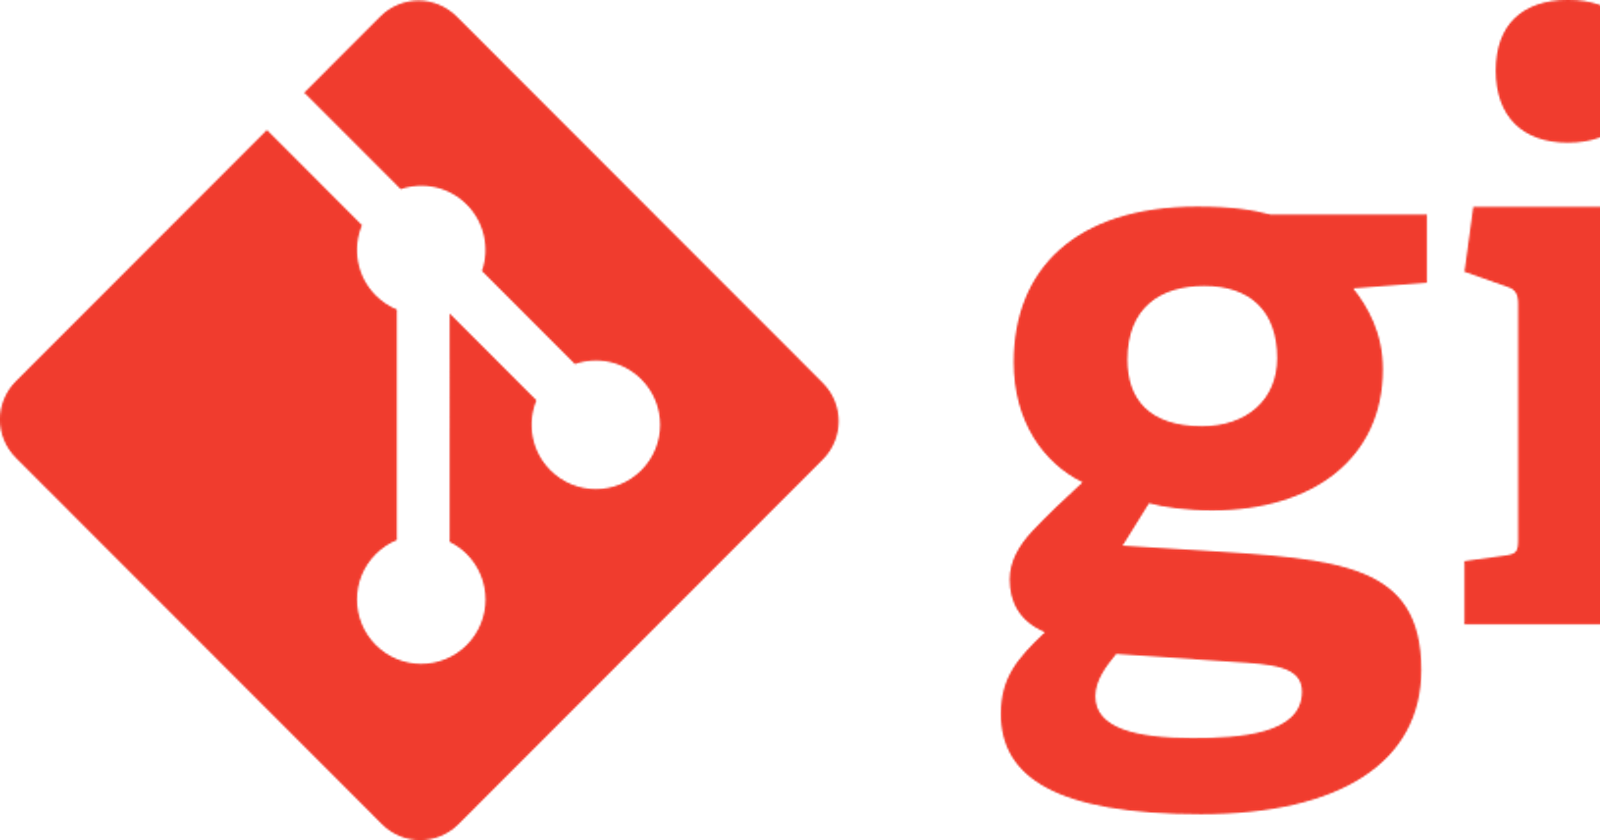 How To Install Git and Github